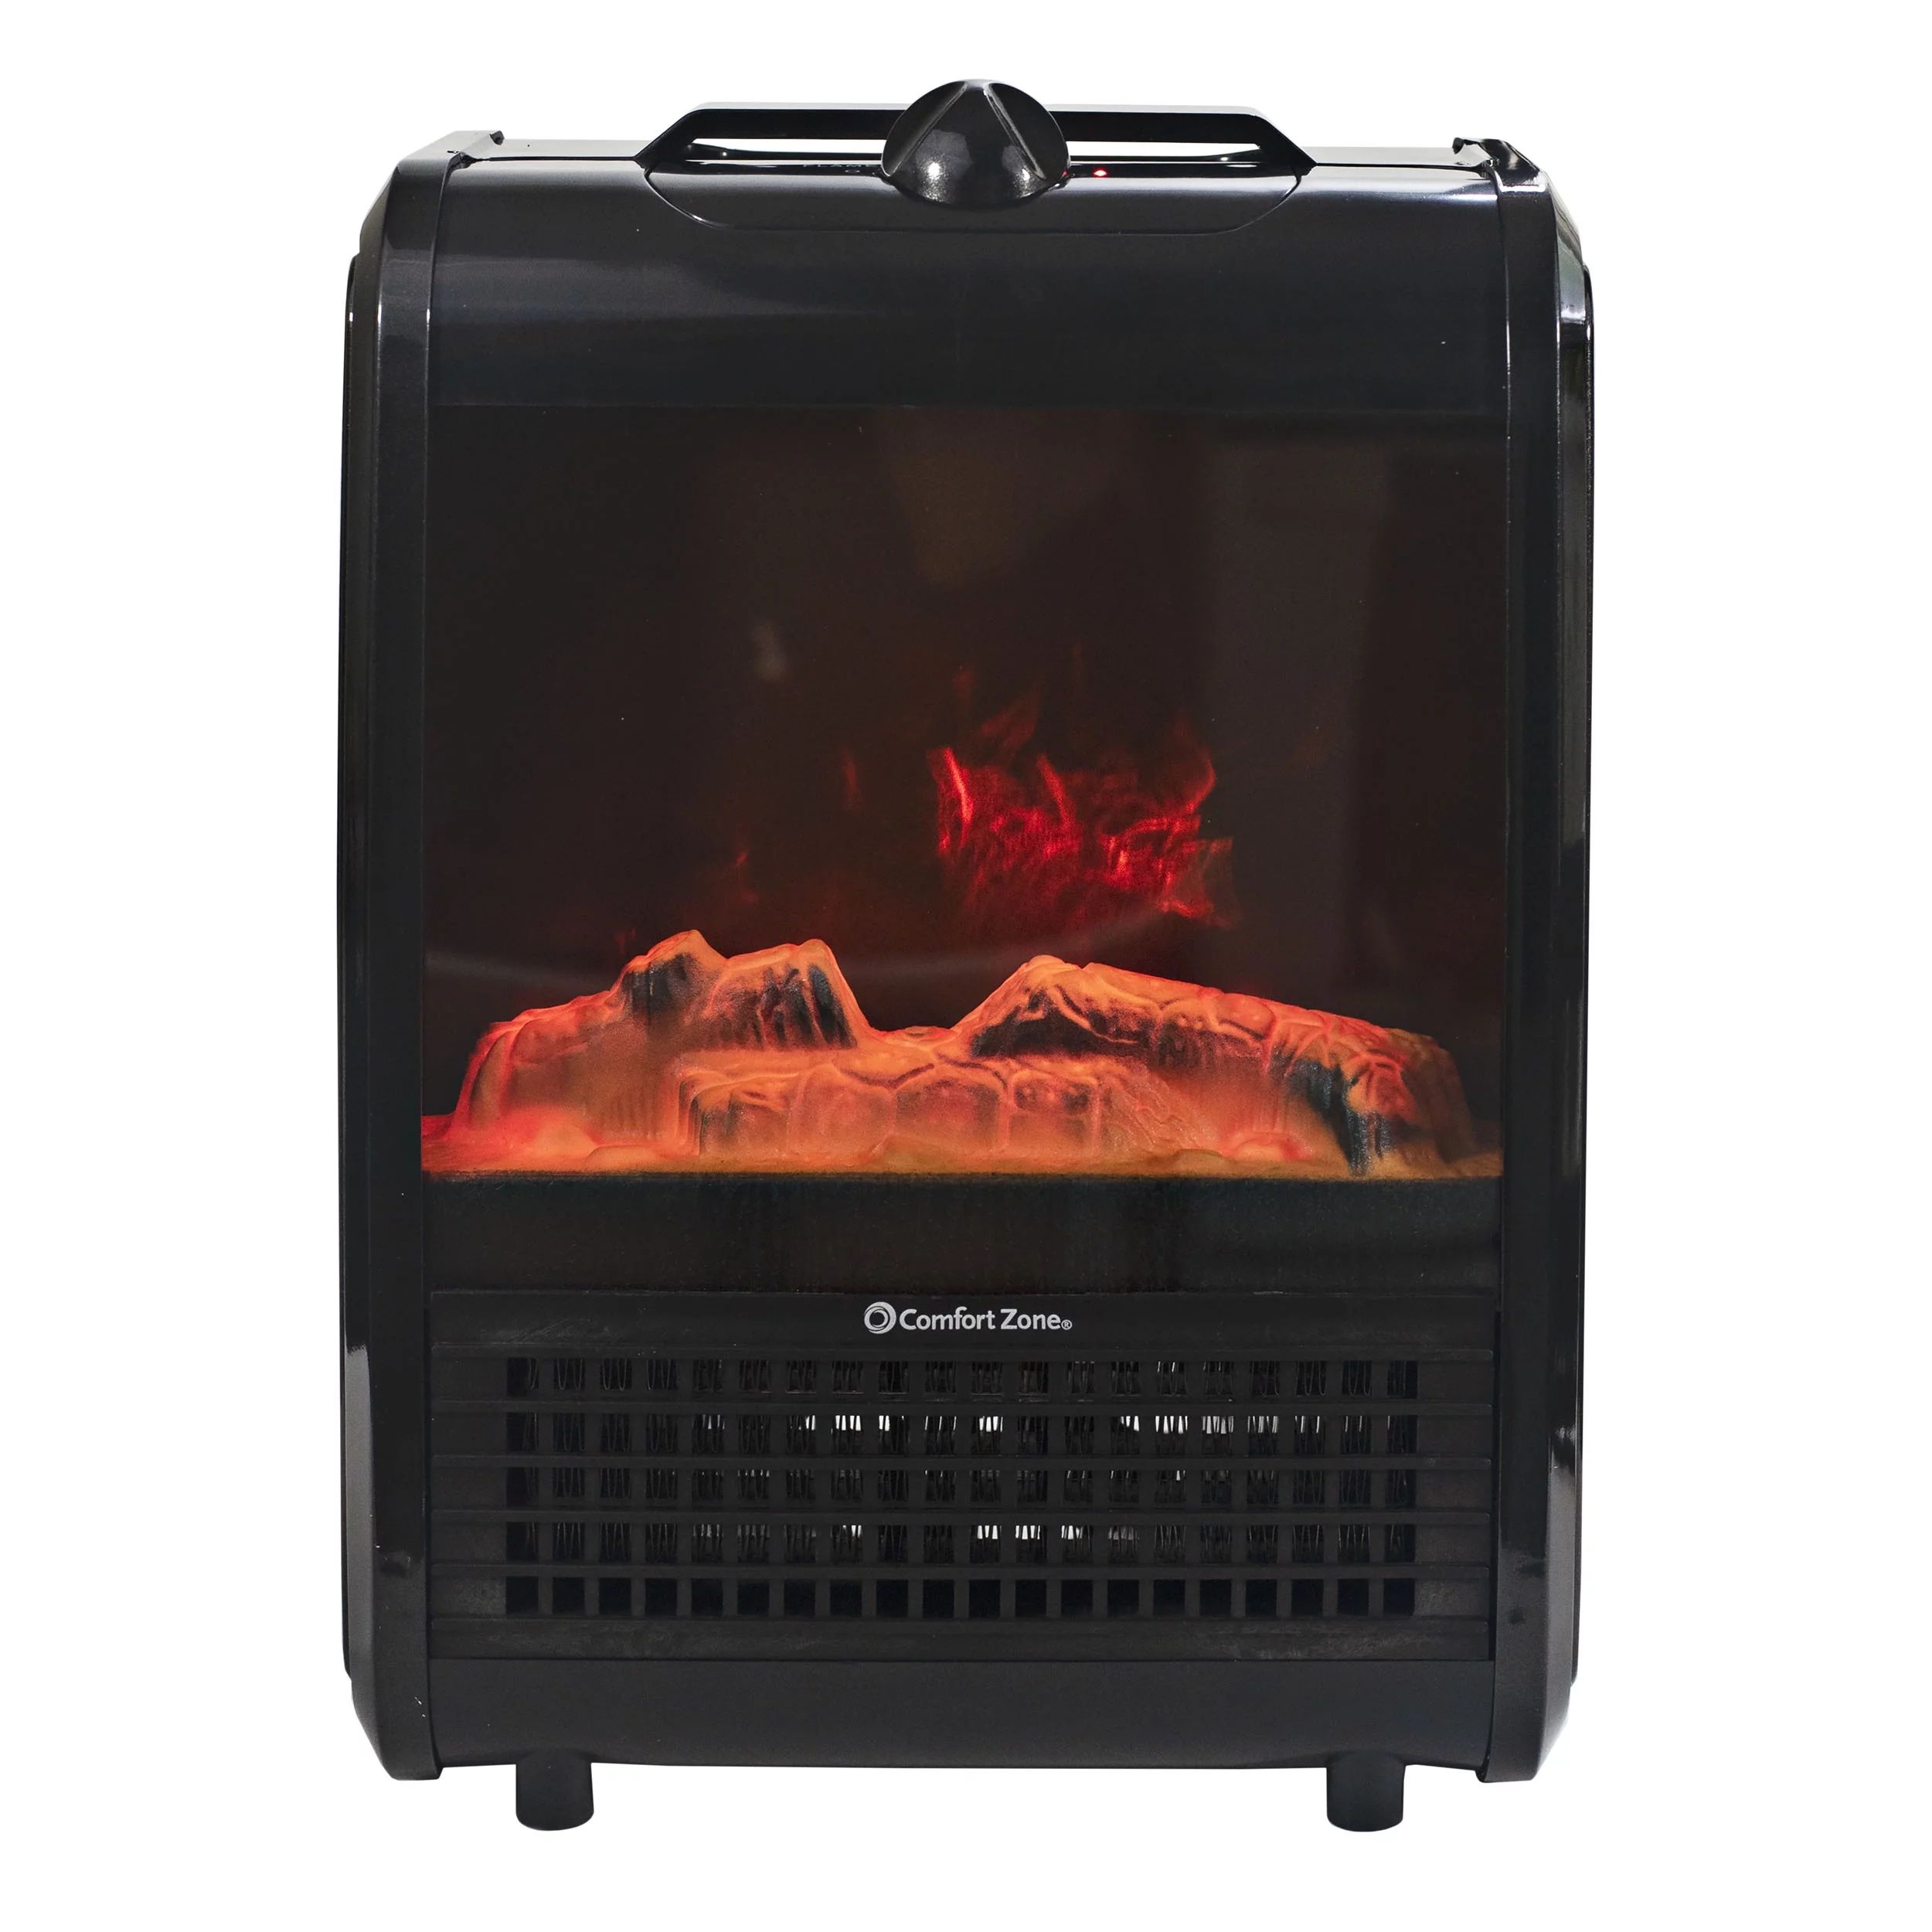 Comfort Zone 1200W Ceramic Electric Fireplace Heater, Black | Walmart (US)